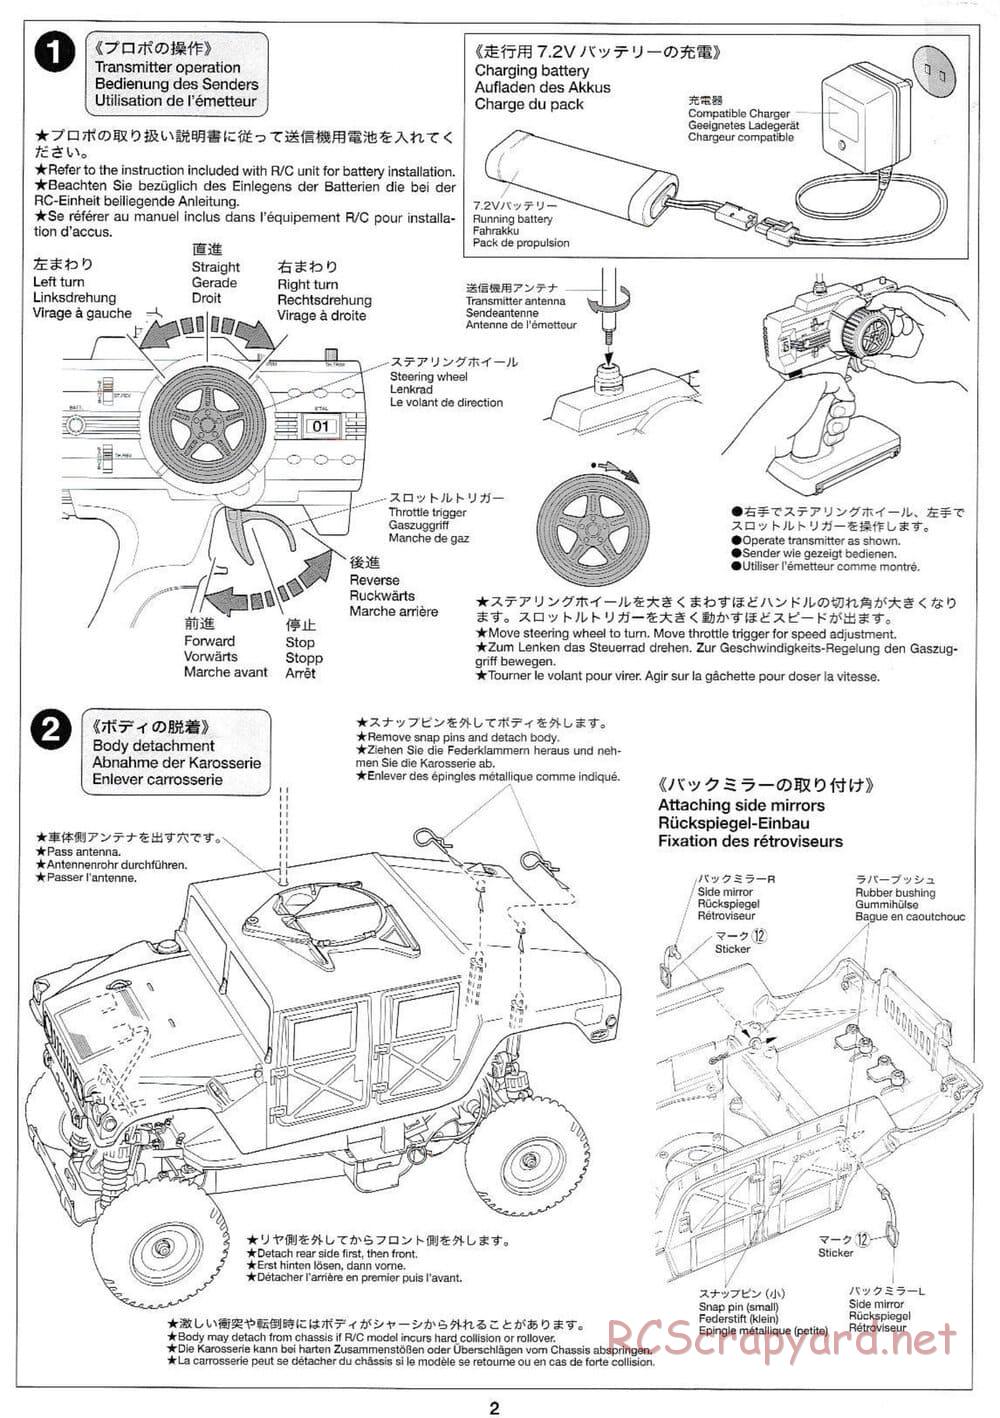 Tamiya - XB M1025 Humvee - DF-01 Chassis - Manual - Page 2